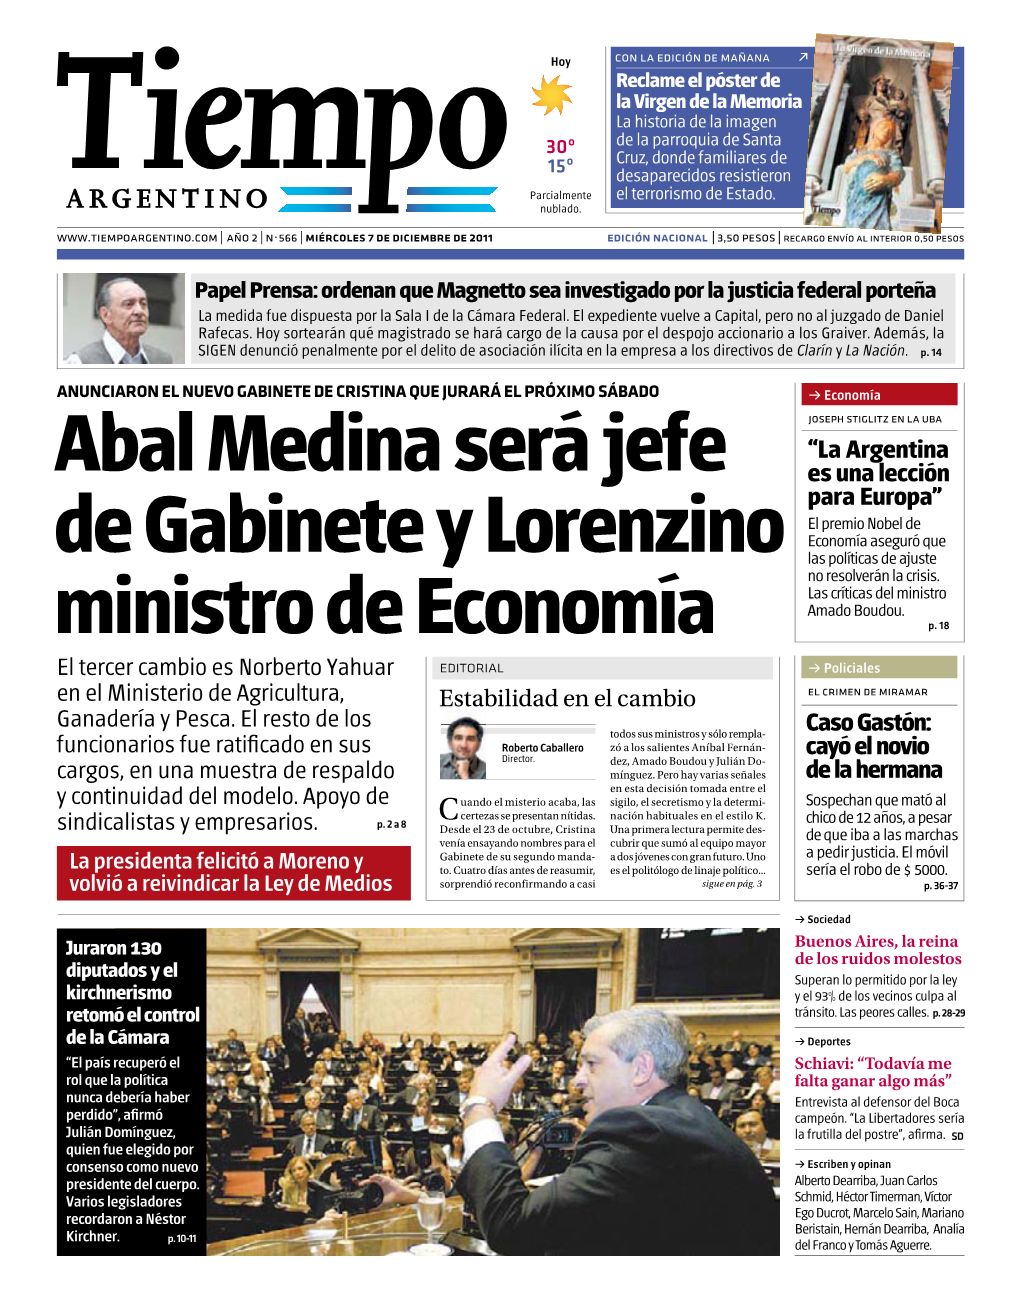 Abal Medina Será Jefe De Gabinete Y Lorenzino Ministro De Economía